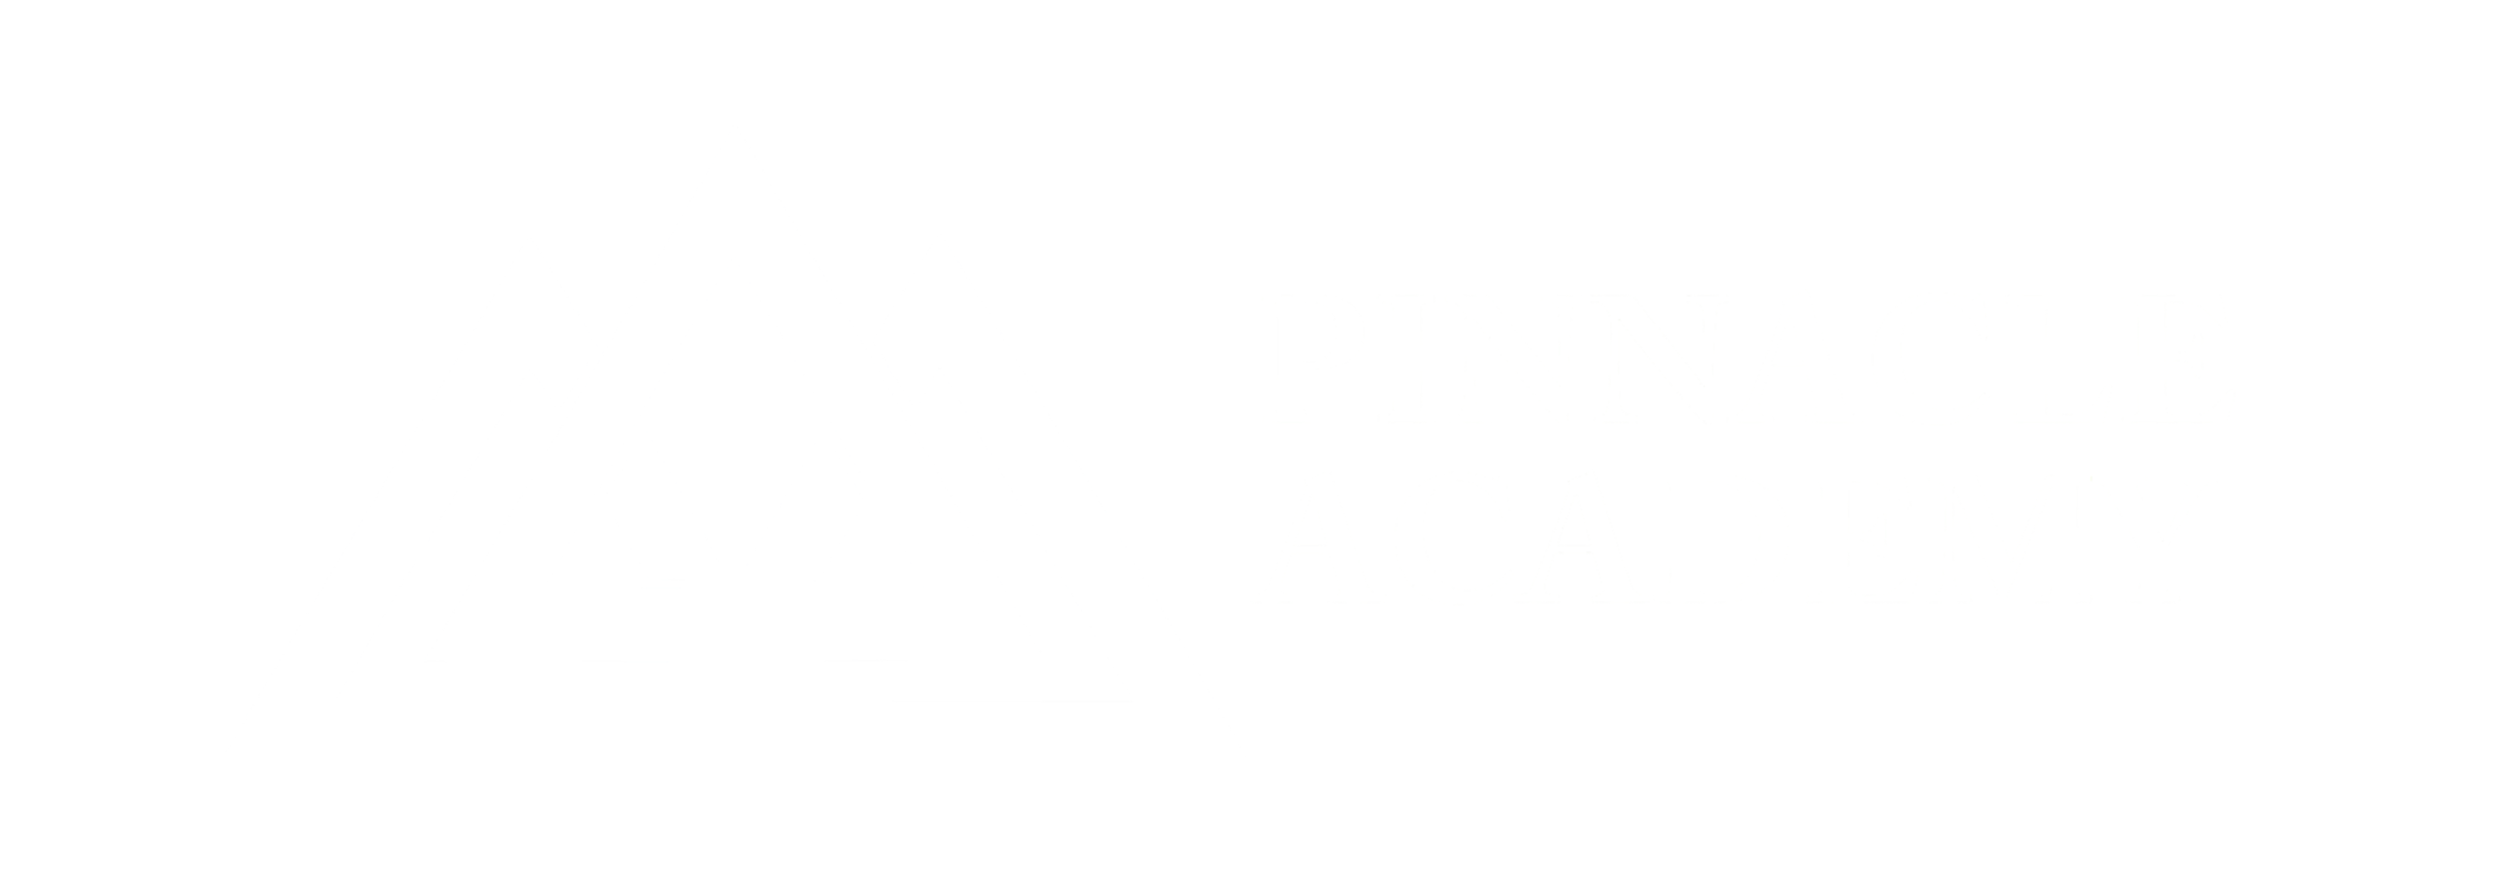 The Pinnacle Academy